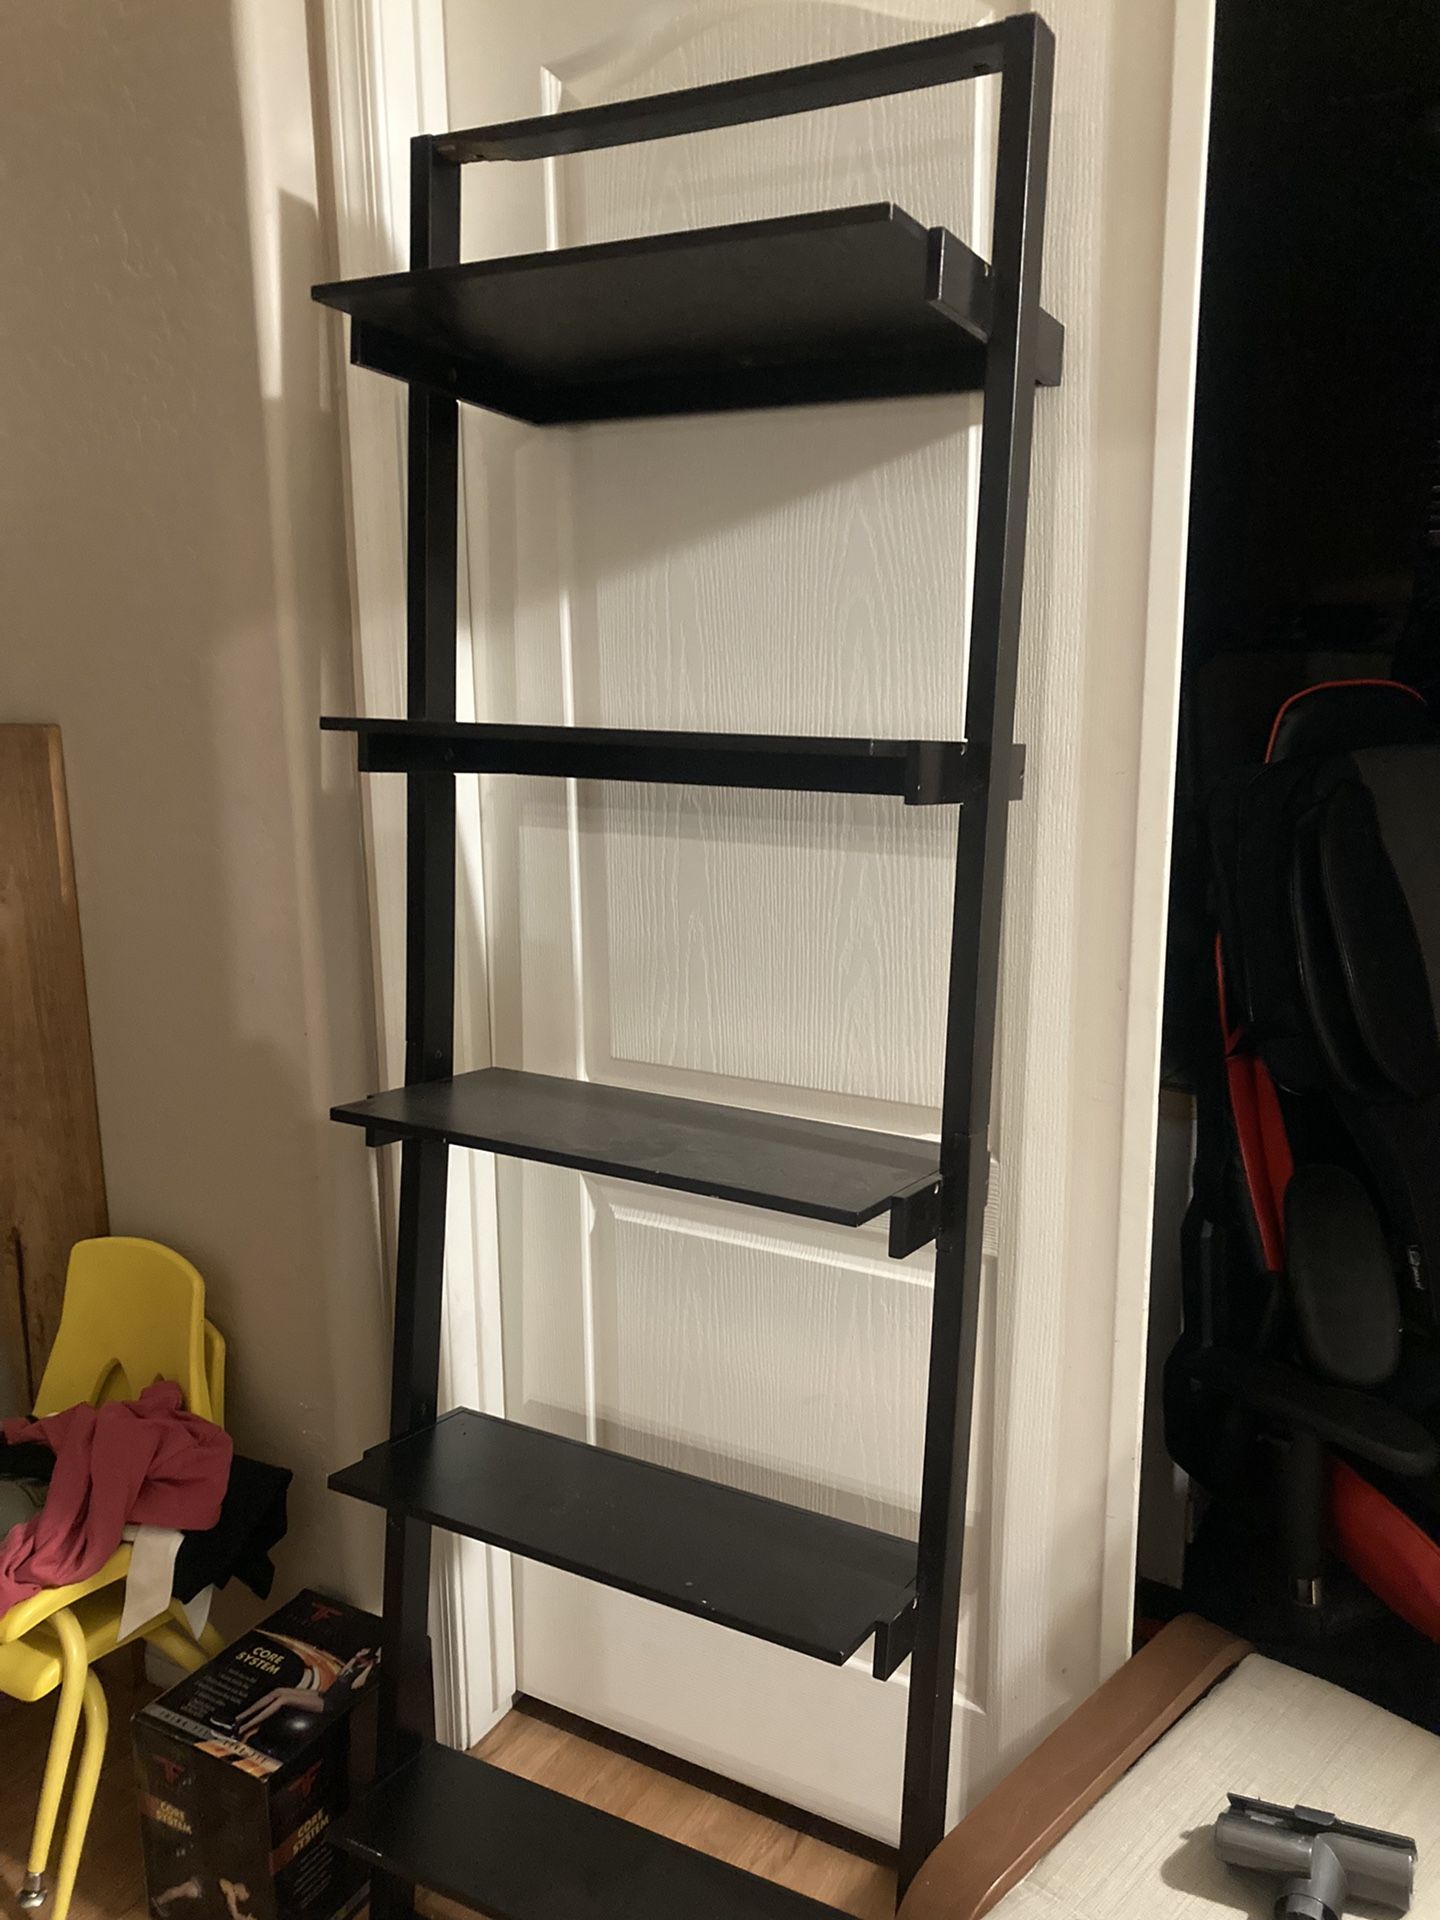 Wooden Ladder Shelves